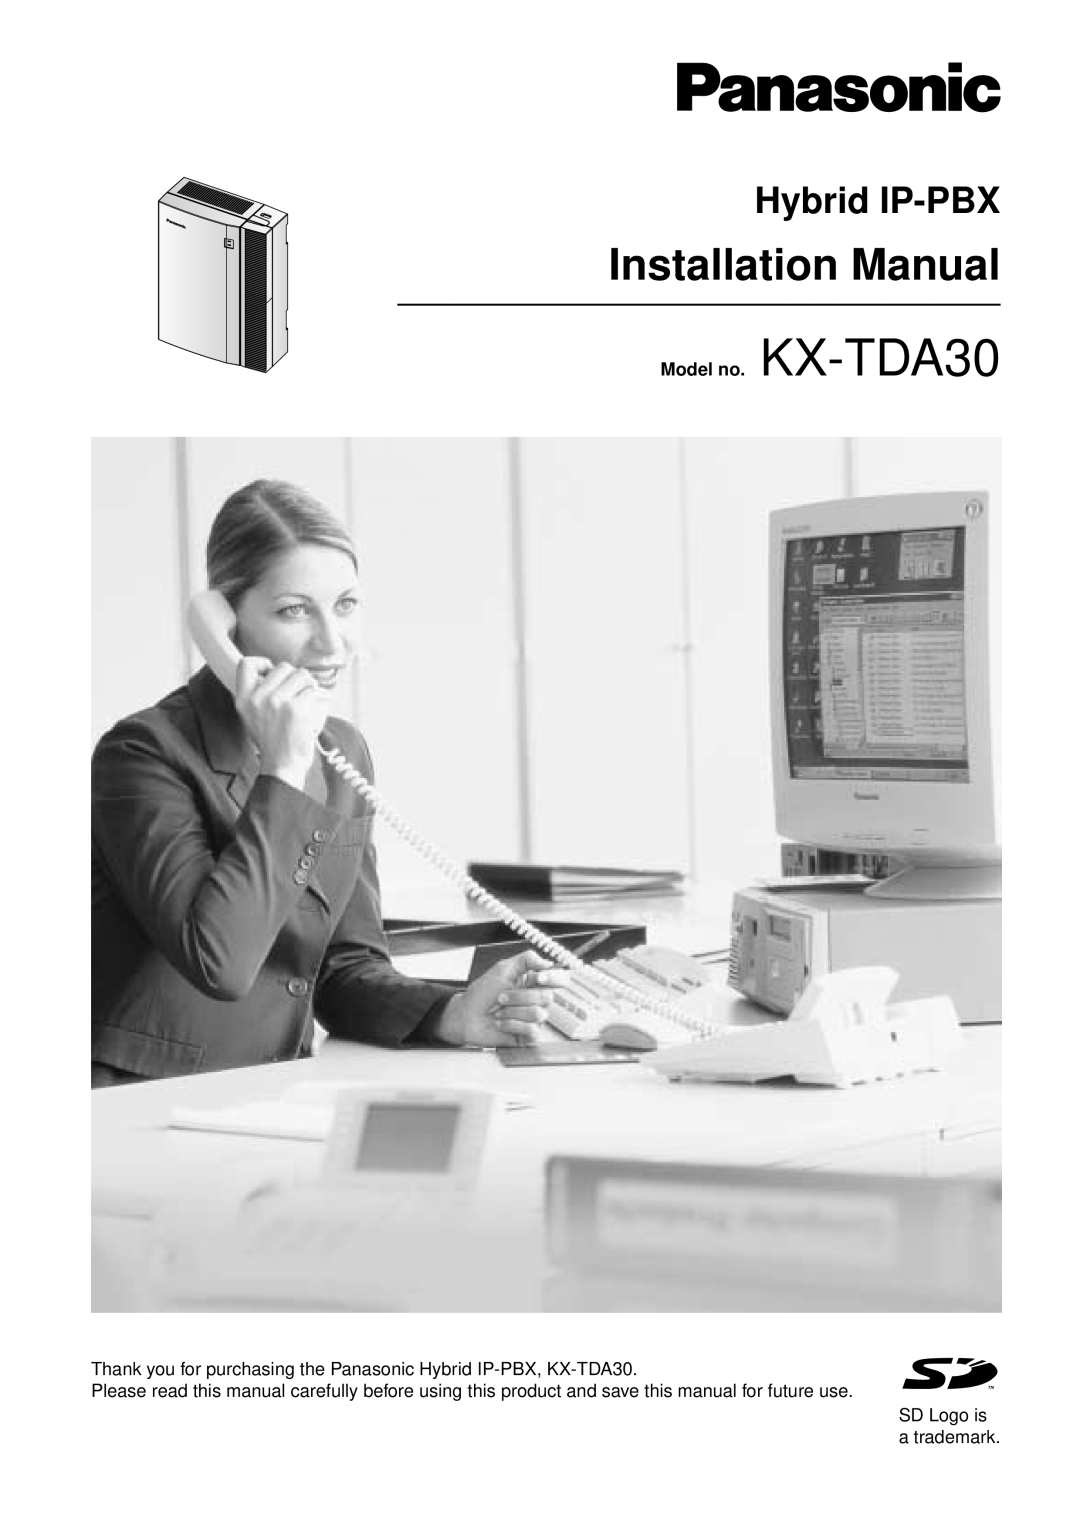 Panasonic installation manual Hybrid IP-PBX, Installation Manual, Model no. KX-TDA30 